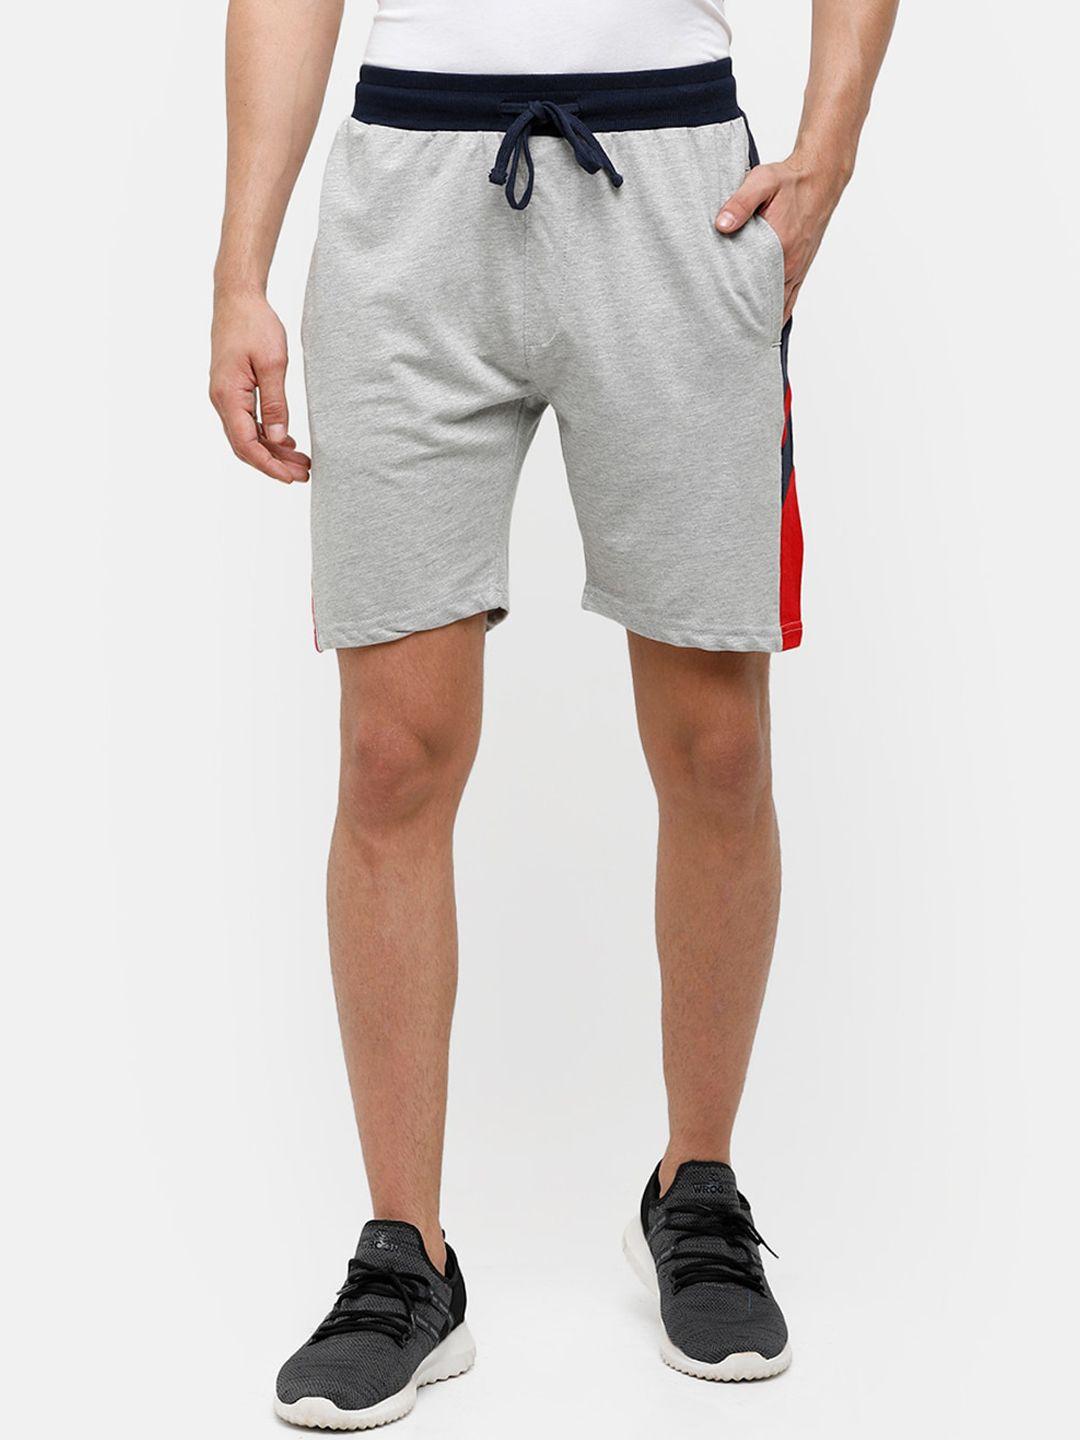 madsto men grey regular shorts